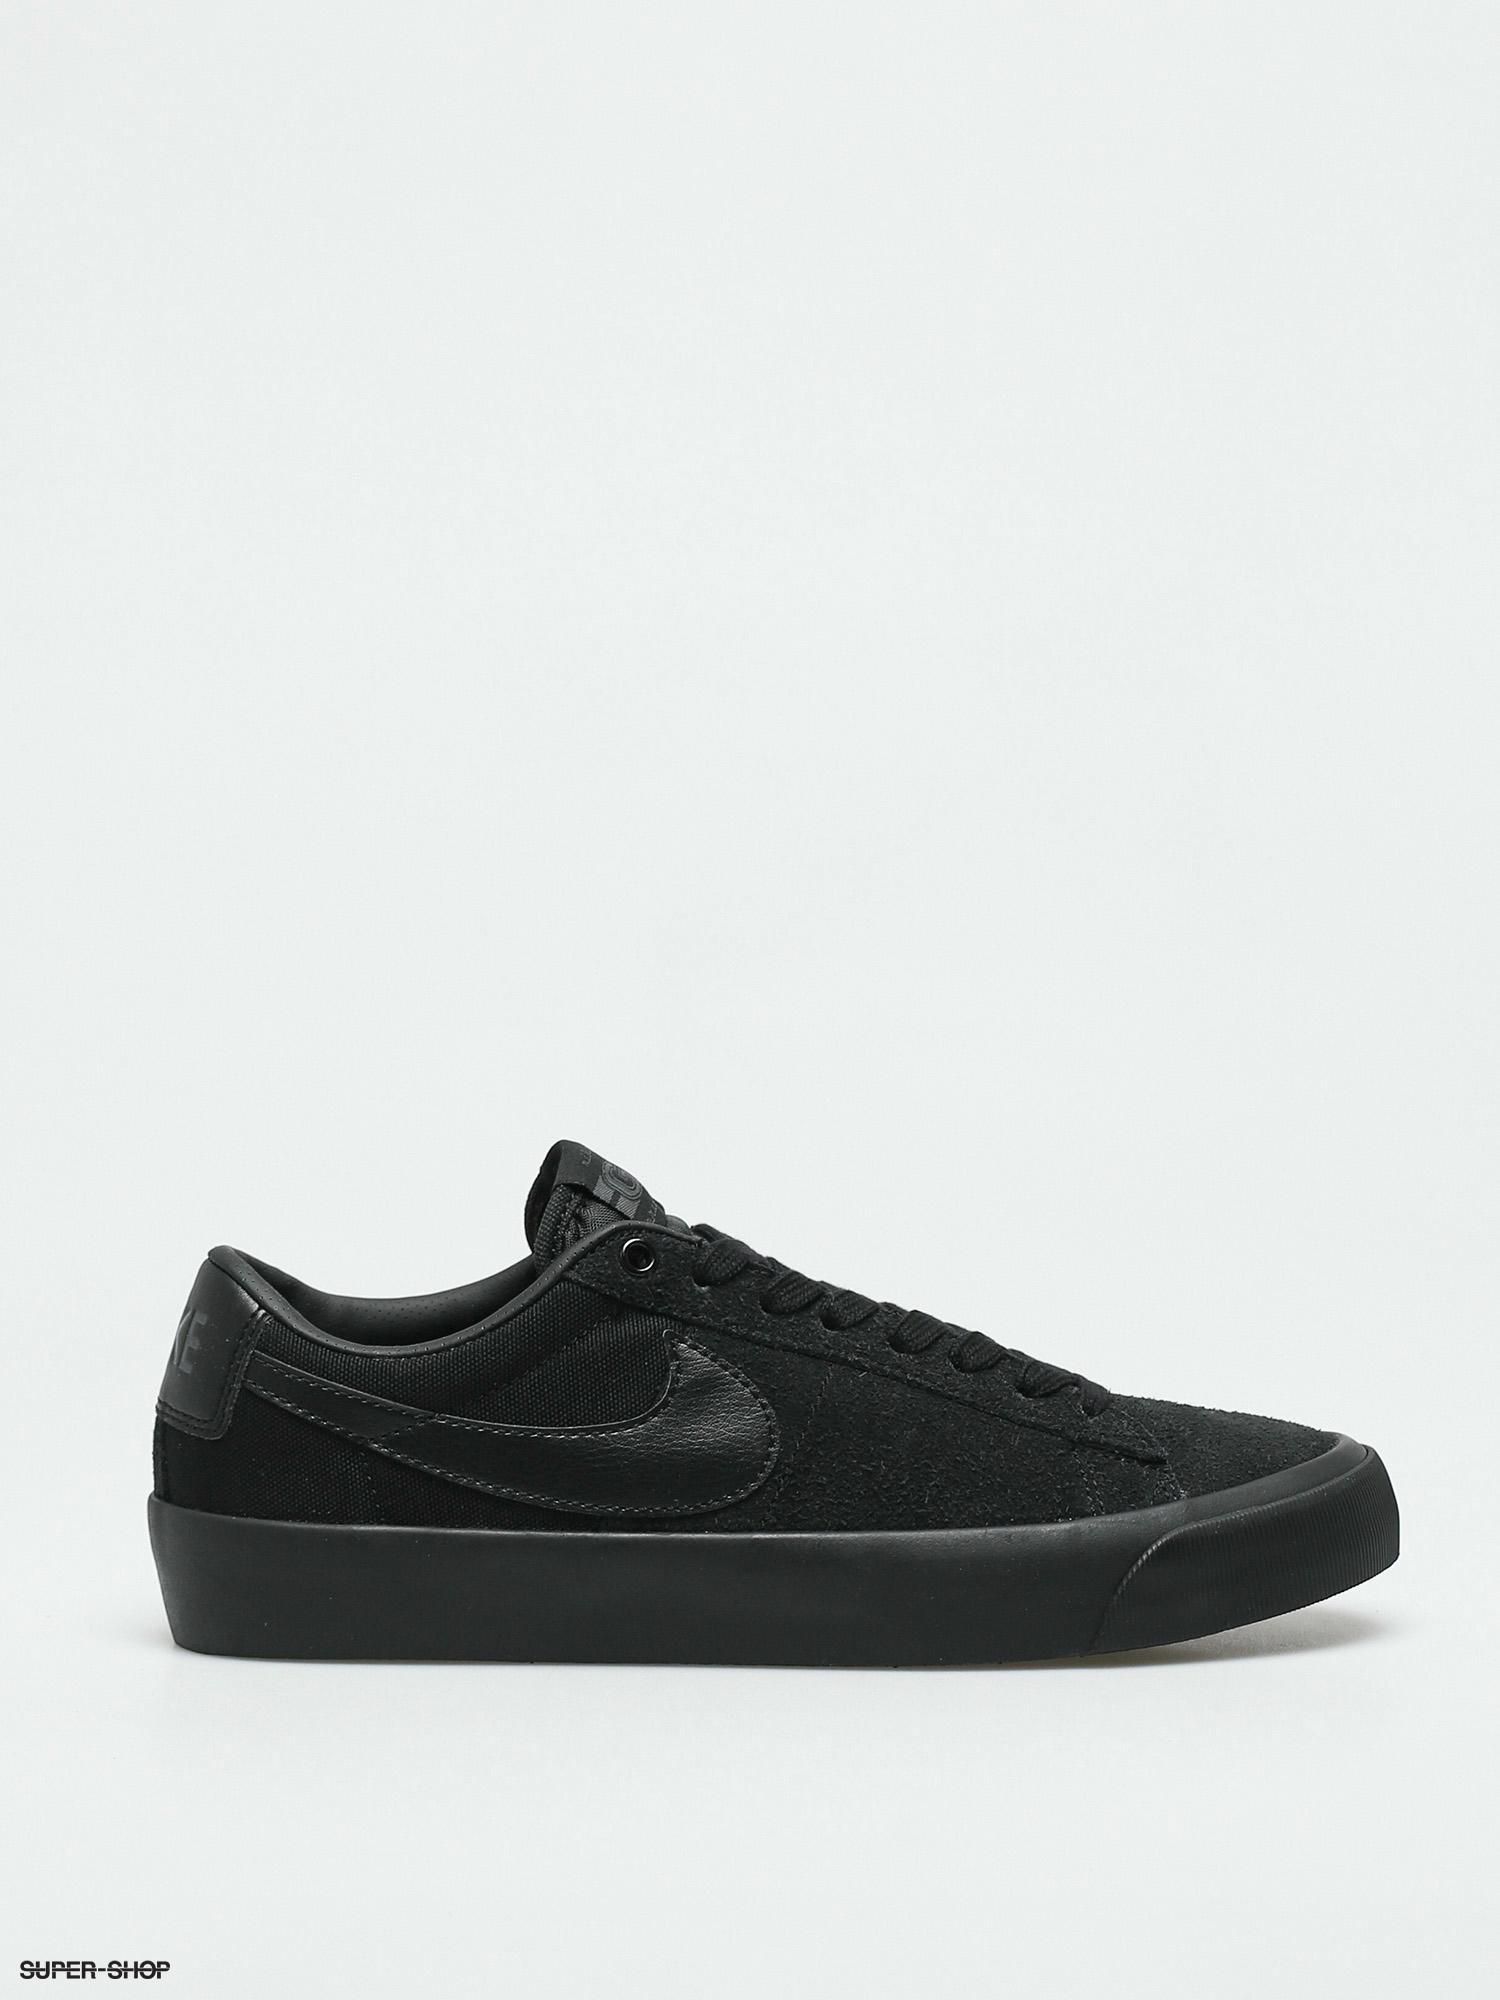 sobresalir Contribuir Melodioso Nike SB Zoom Blazer Low Pro Gt Shoes (black/black black anthracite)